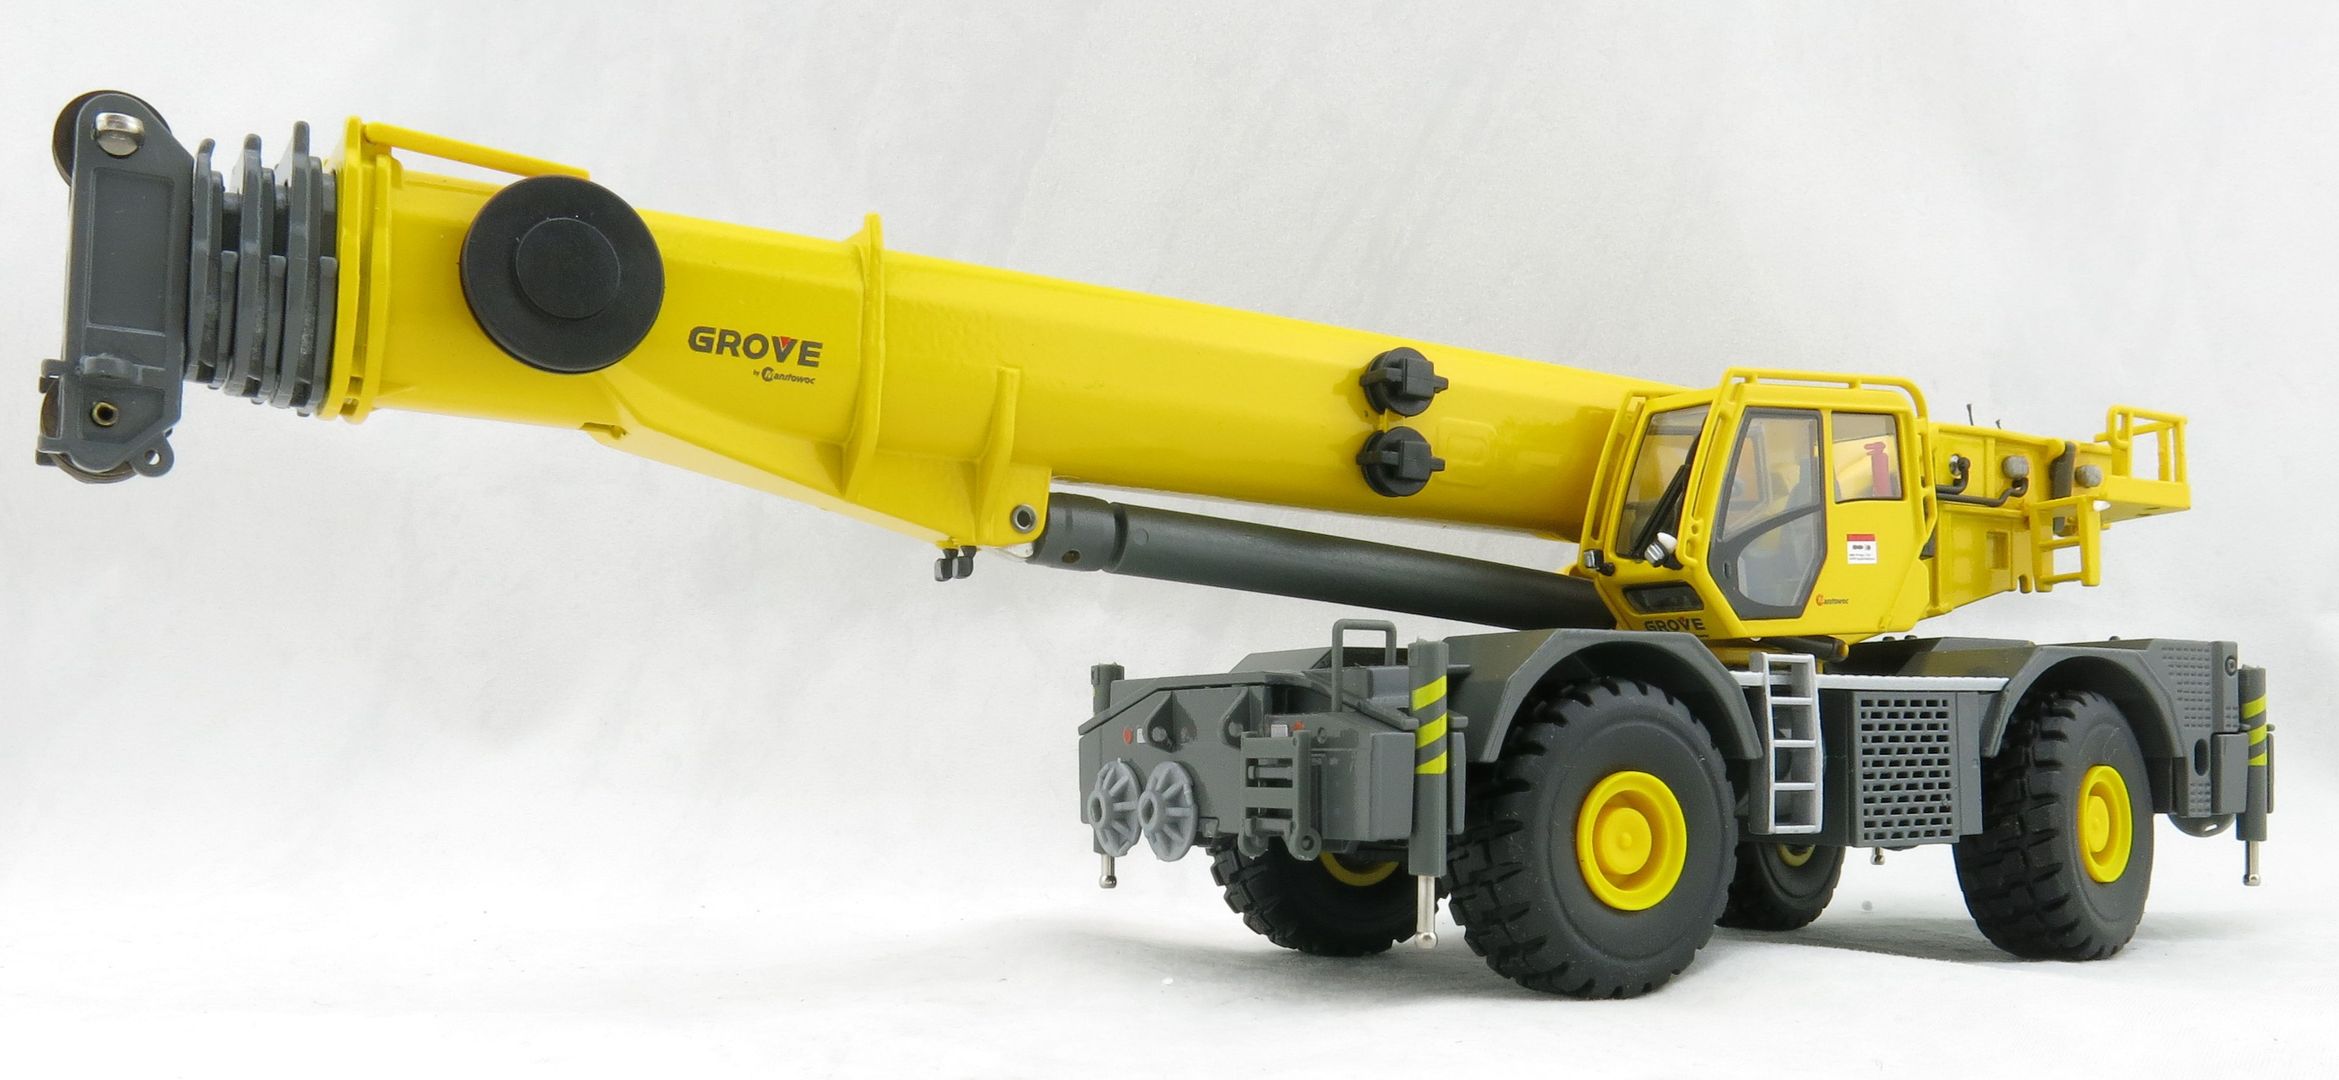 Product Image - Conrad 2117/0 GROVE GRT 8100  Rough Terrain Mobile Crane - Scale 1:50